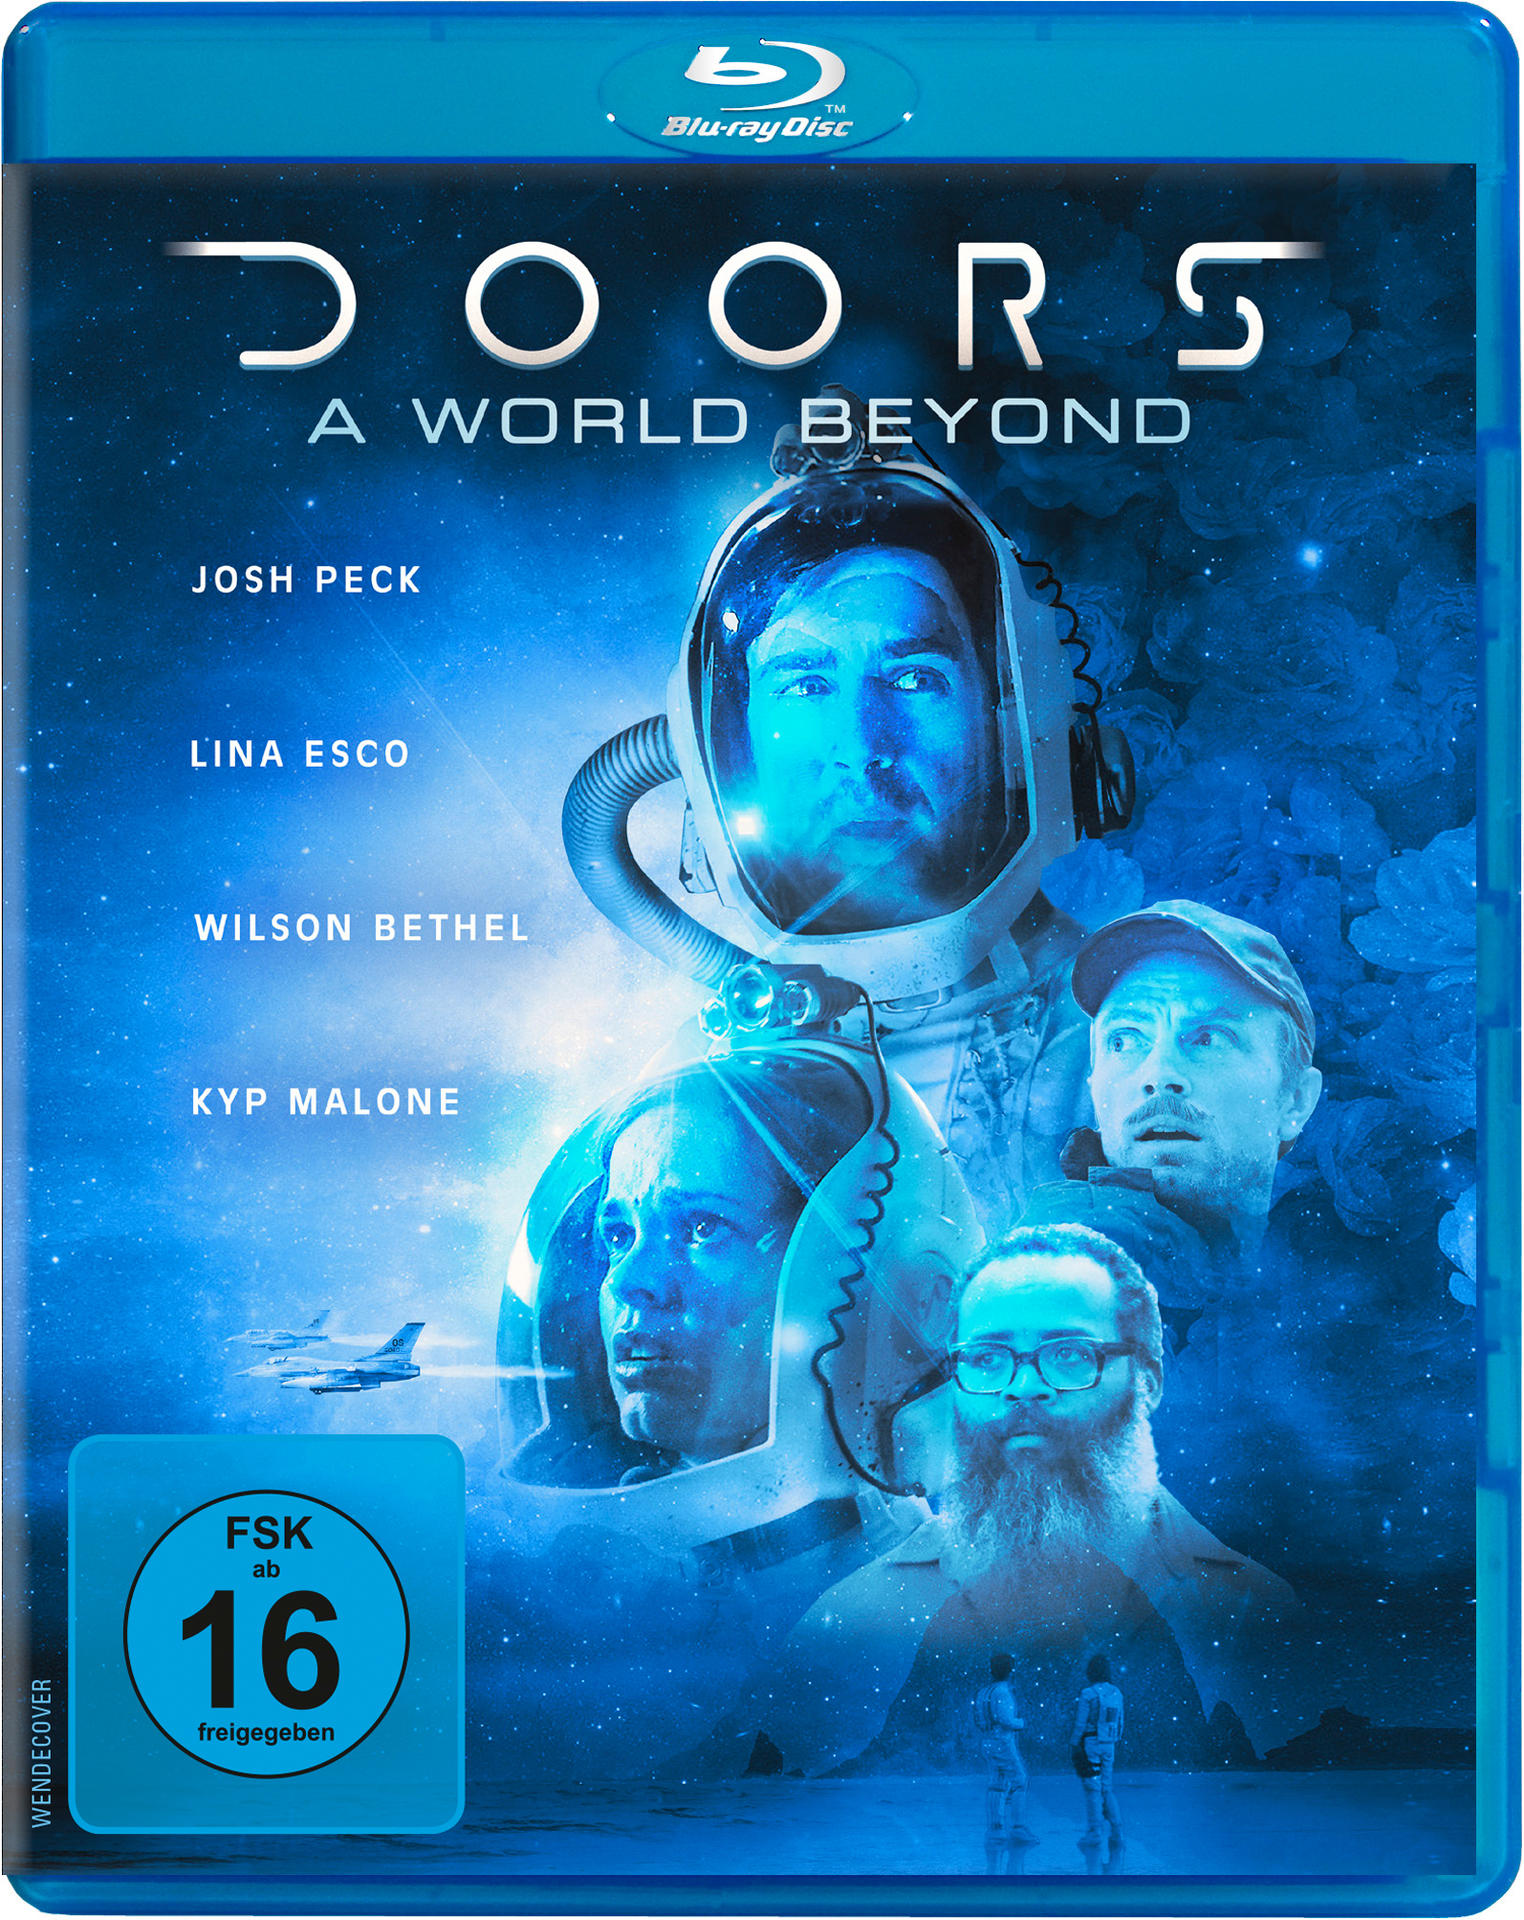 World Beyond - Blu-ray A Doors